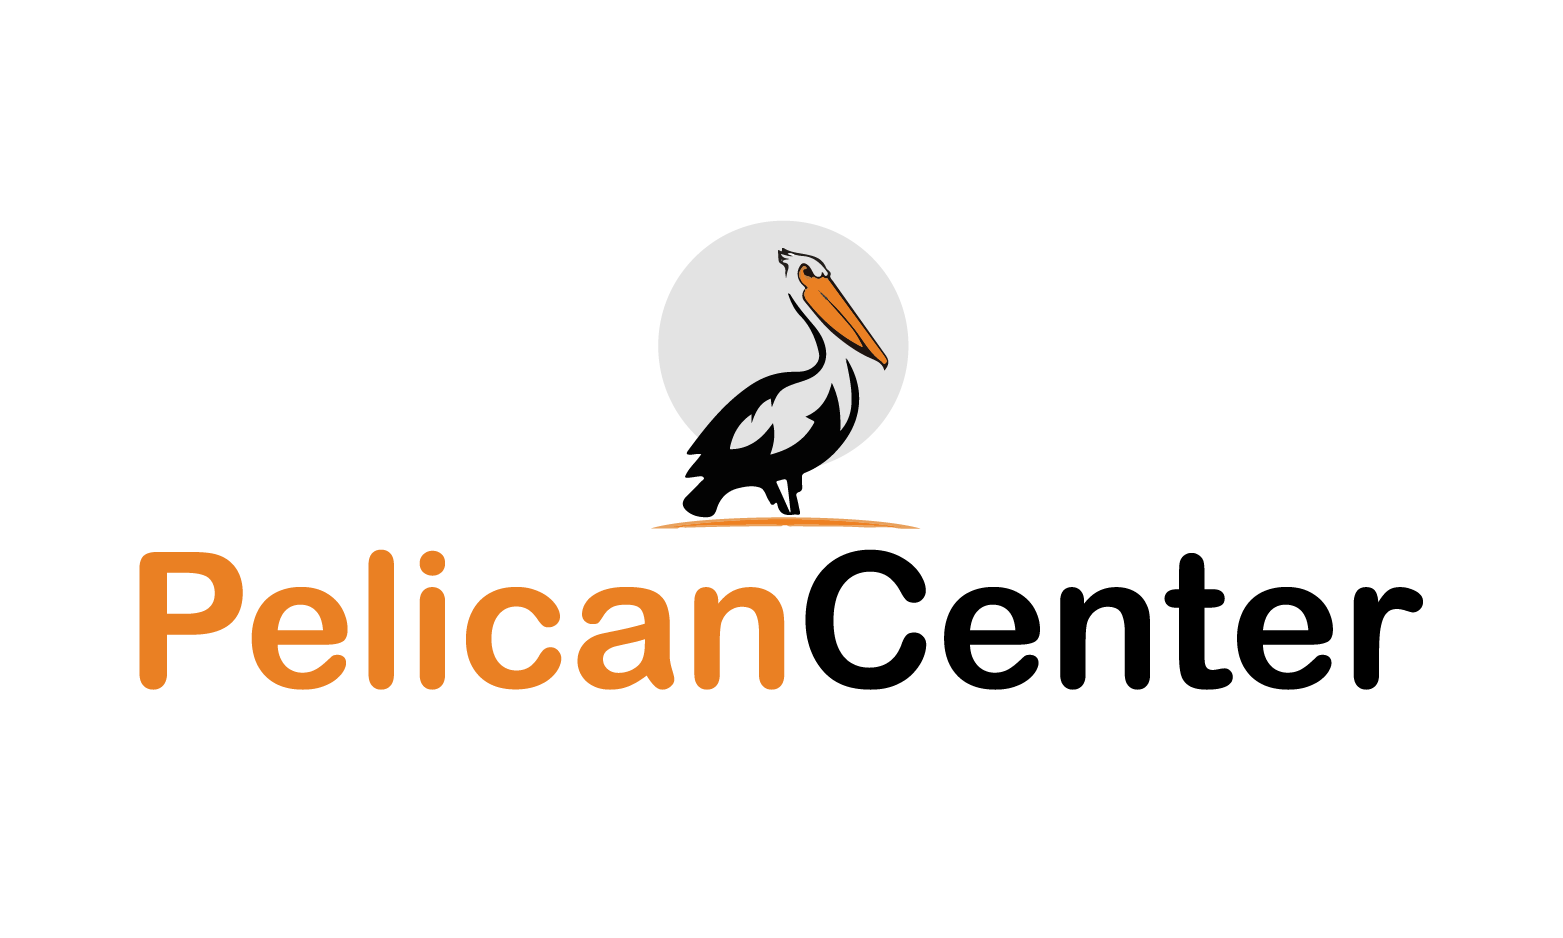 PelicanCenter.com - Creative brandable domain for sale